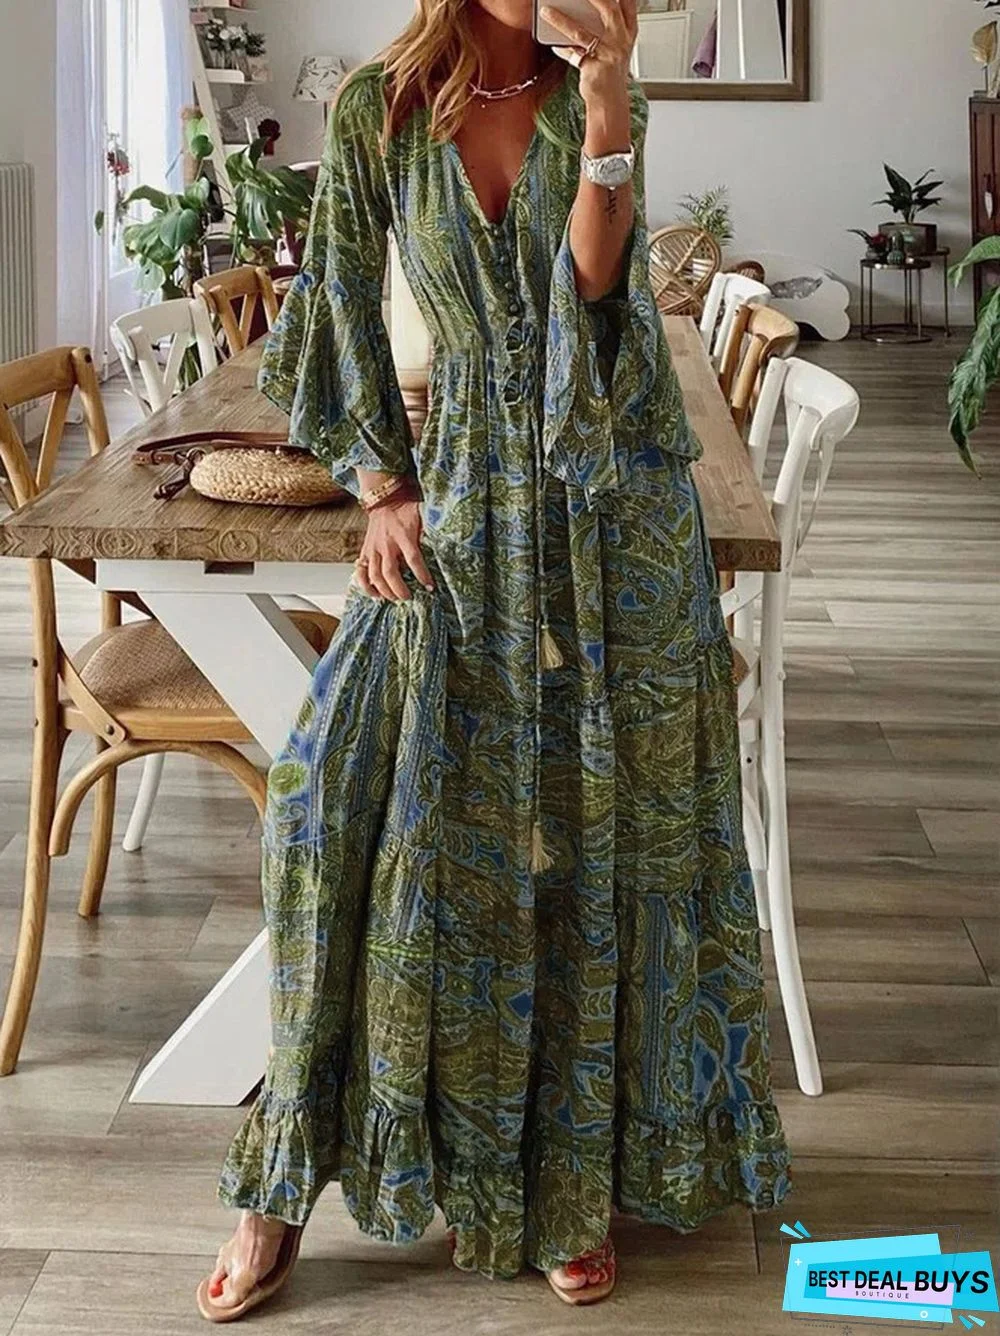 Women's Swing Dress Maxi Long Dress 3/4 Length Sleeve Print Summer Casual Green